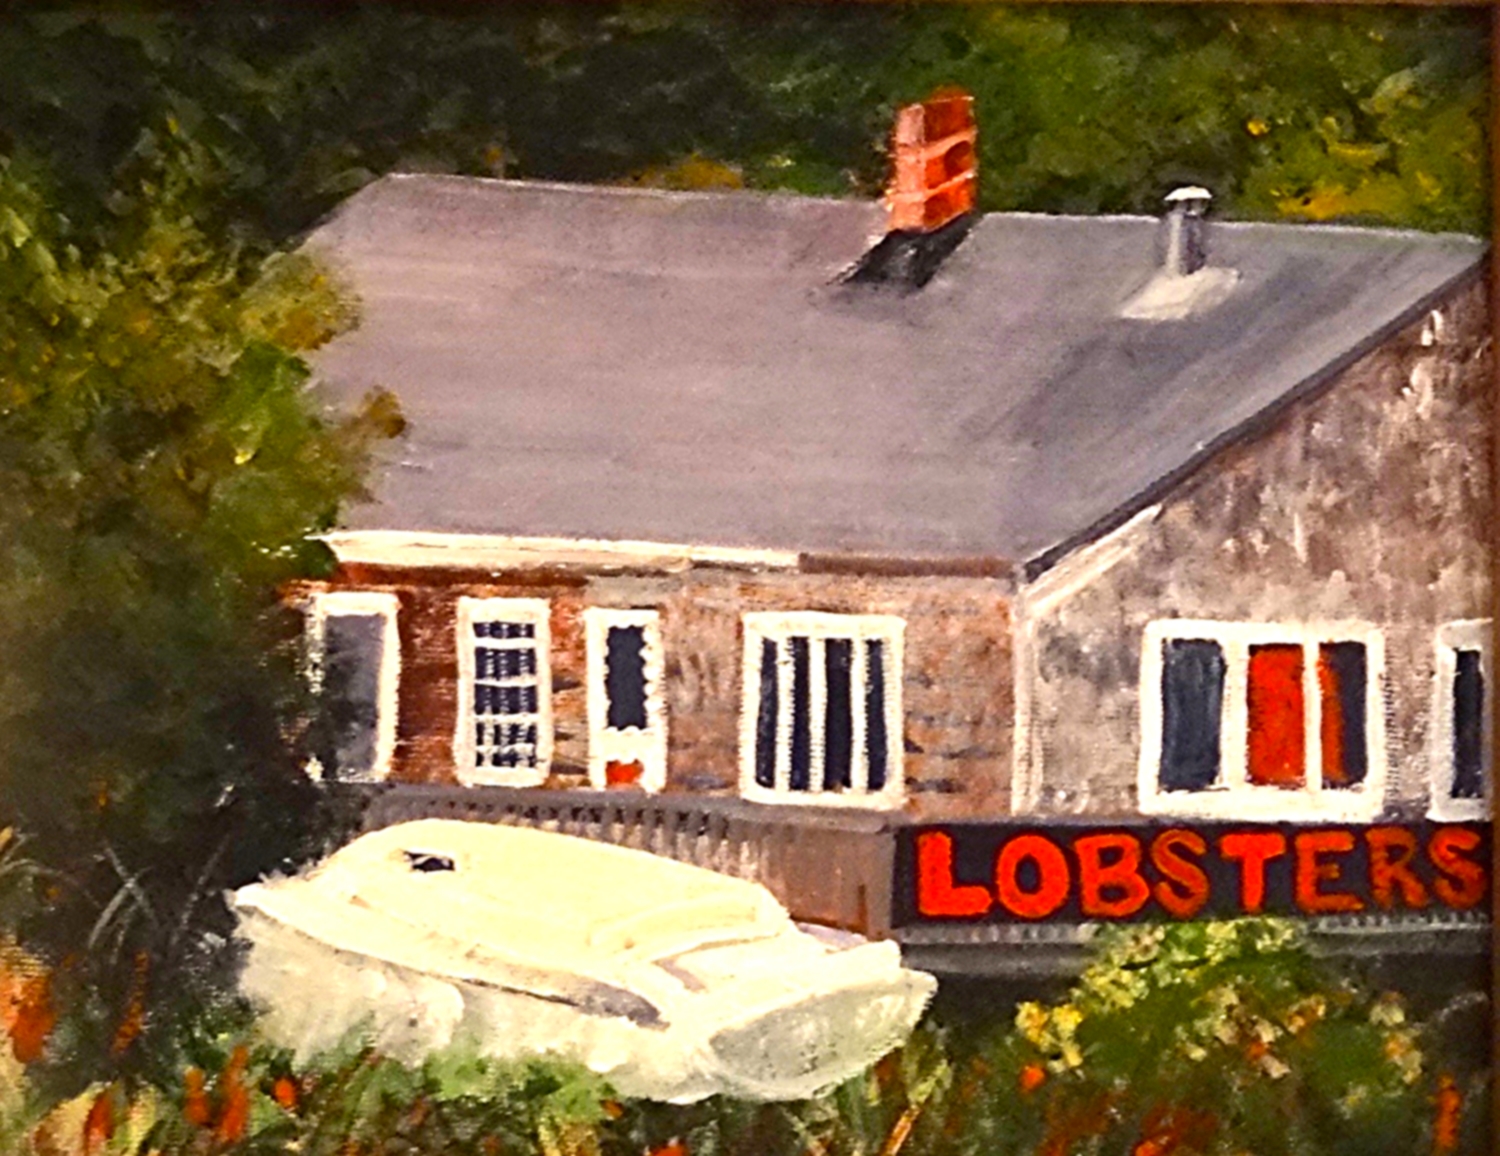 Lobsters for Sale, Wellfleet (Acrylic) SOLD